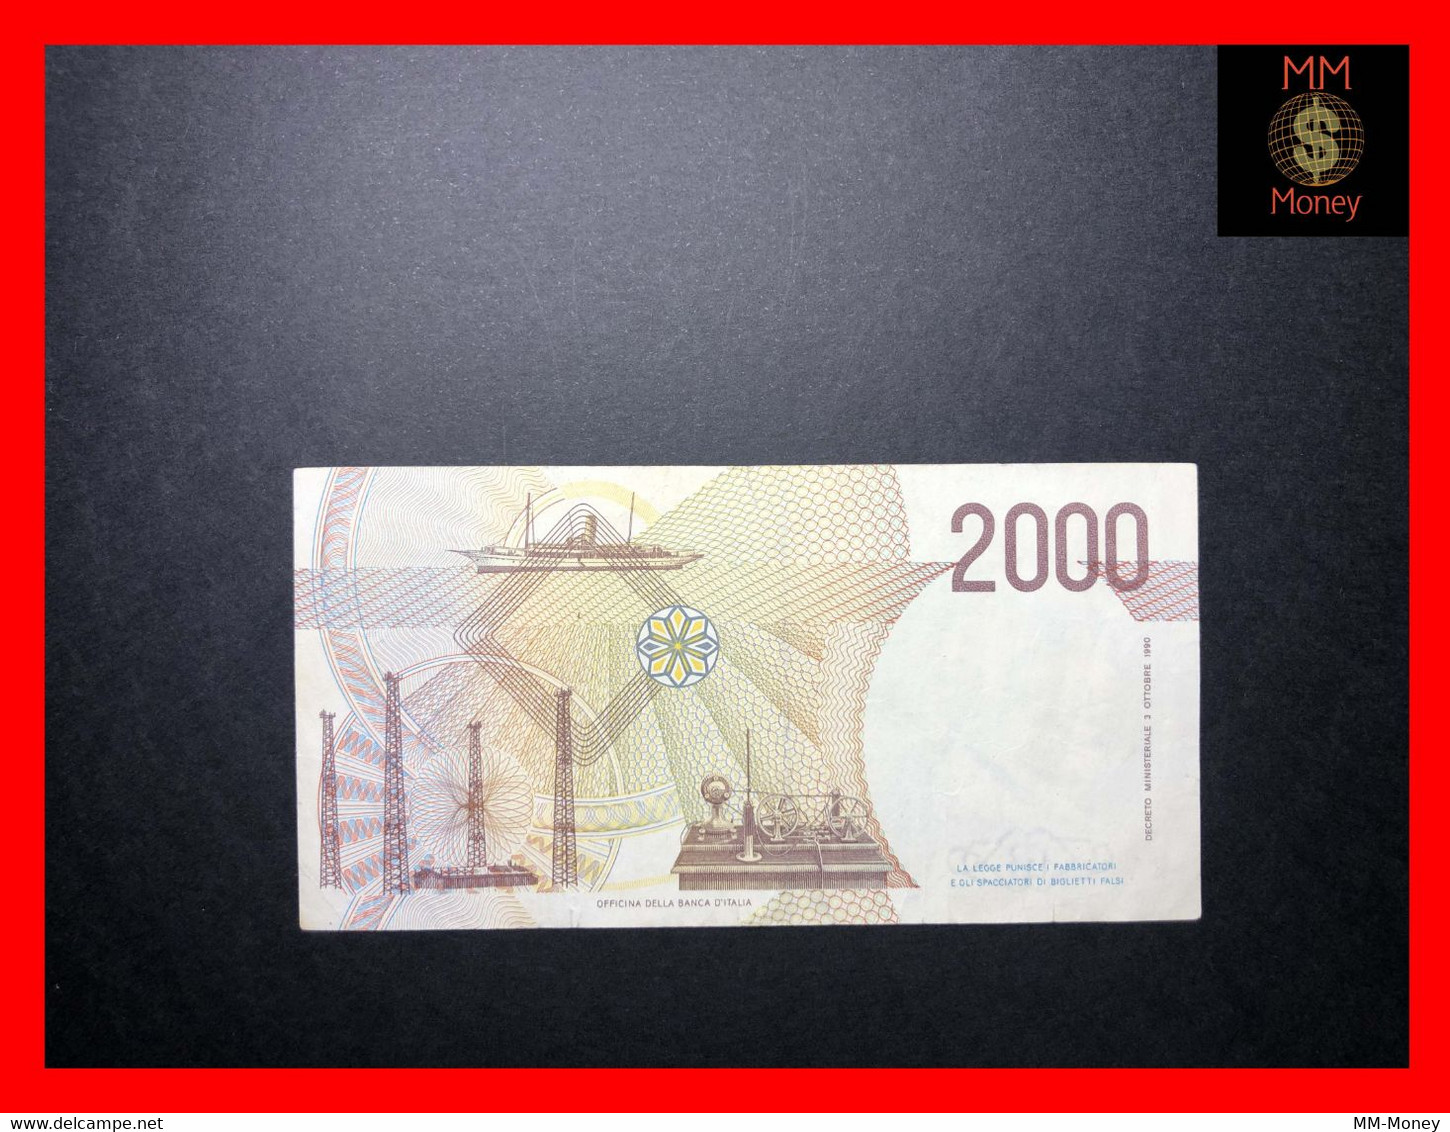 ITALY 2000  2.000 Lire  24.10.1990  P. 115  Sig. Ciampi - Speziali  XF    [MM-Money] - 2000 Lire